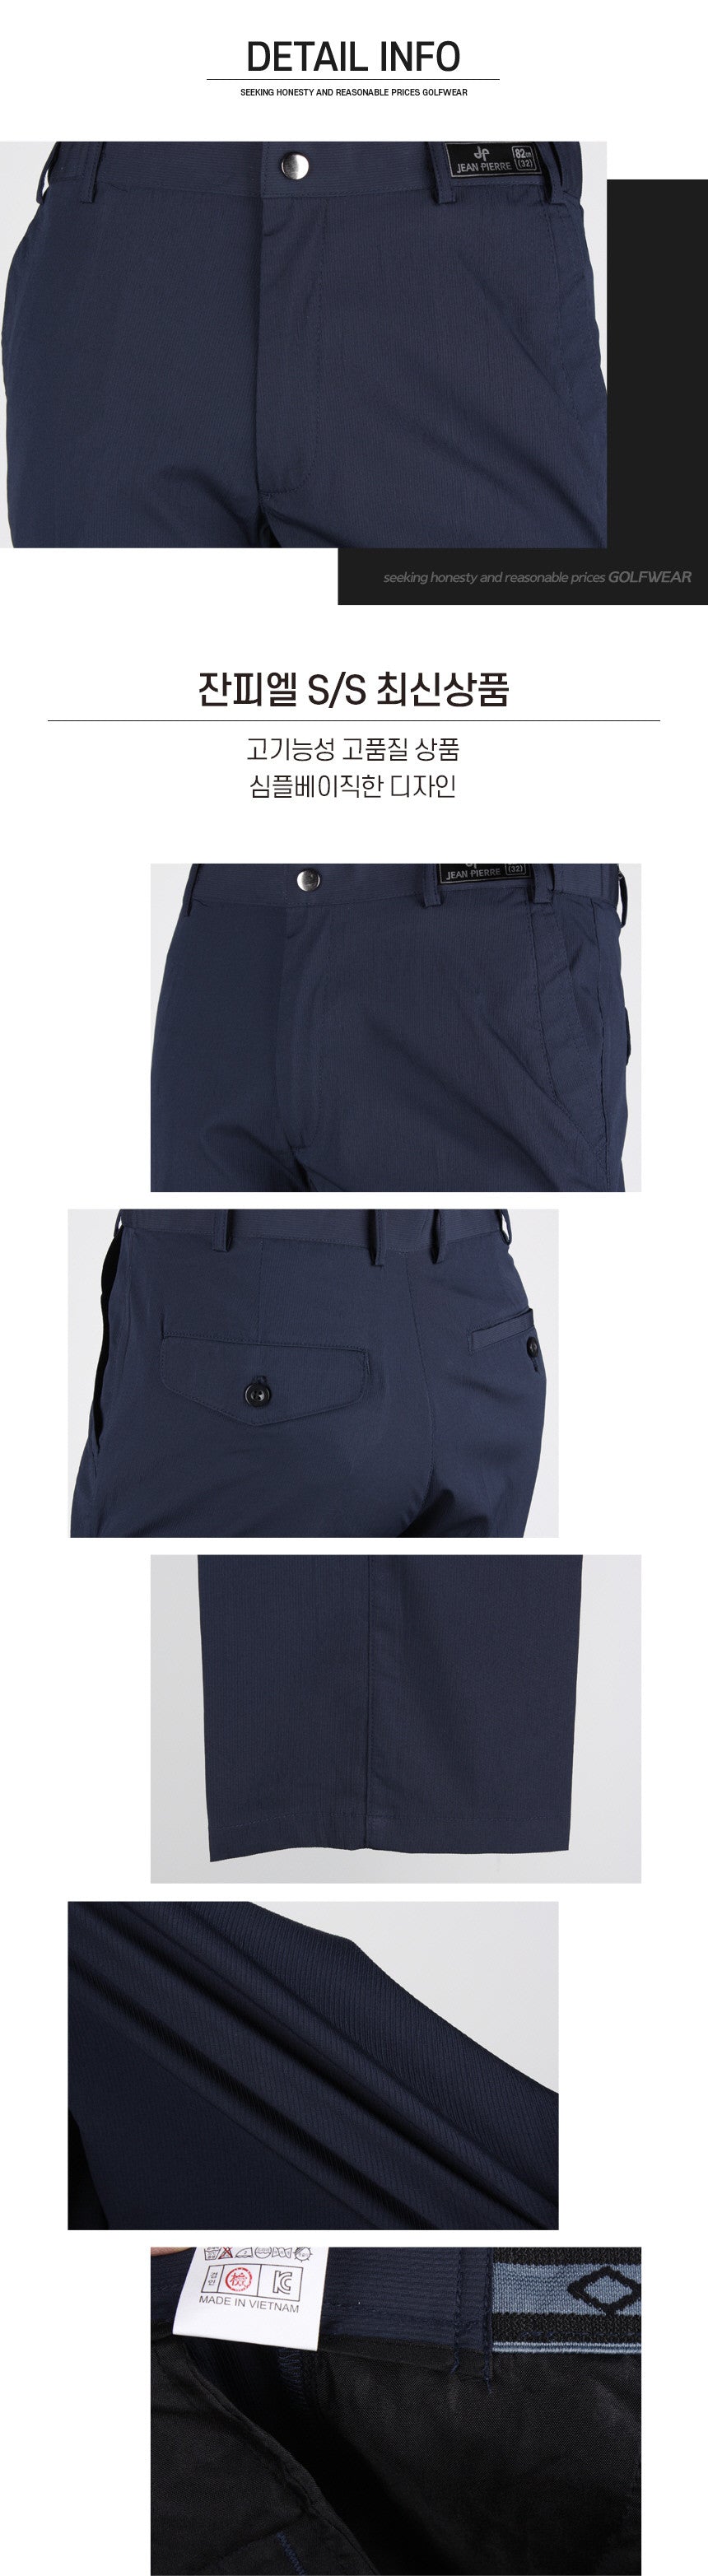 Navyblue Spandex Golf Wear Trousers Mens Pants UV Cut Slim Fit Basic